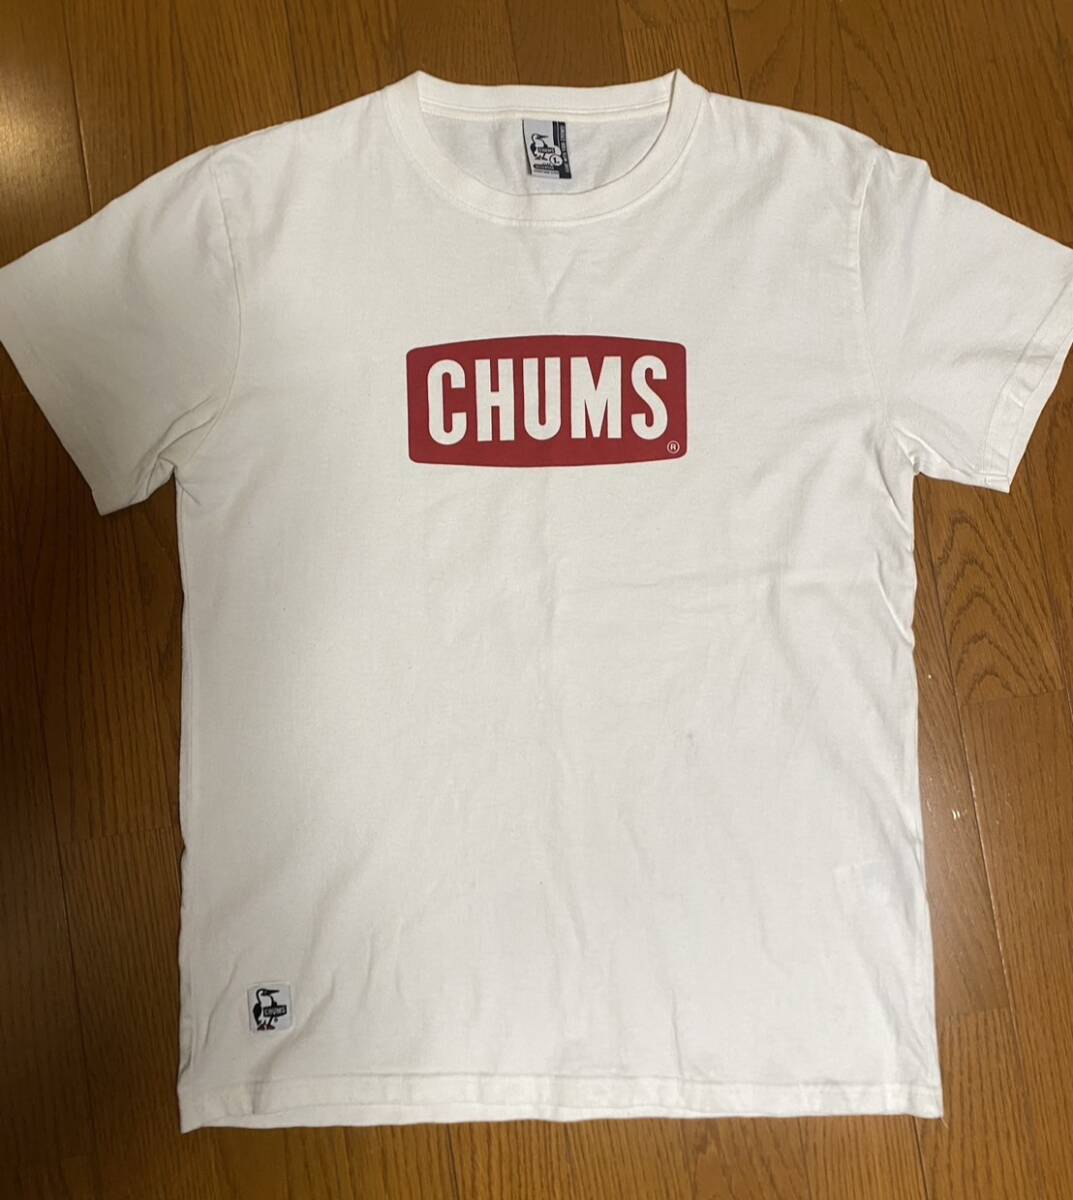 * Chums CHUMS короткий рукав футболка L размер белый цвет Chums Logo стандартный VERSION прекрасный товар!